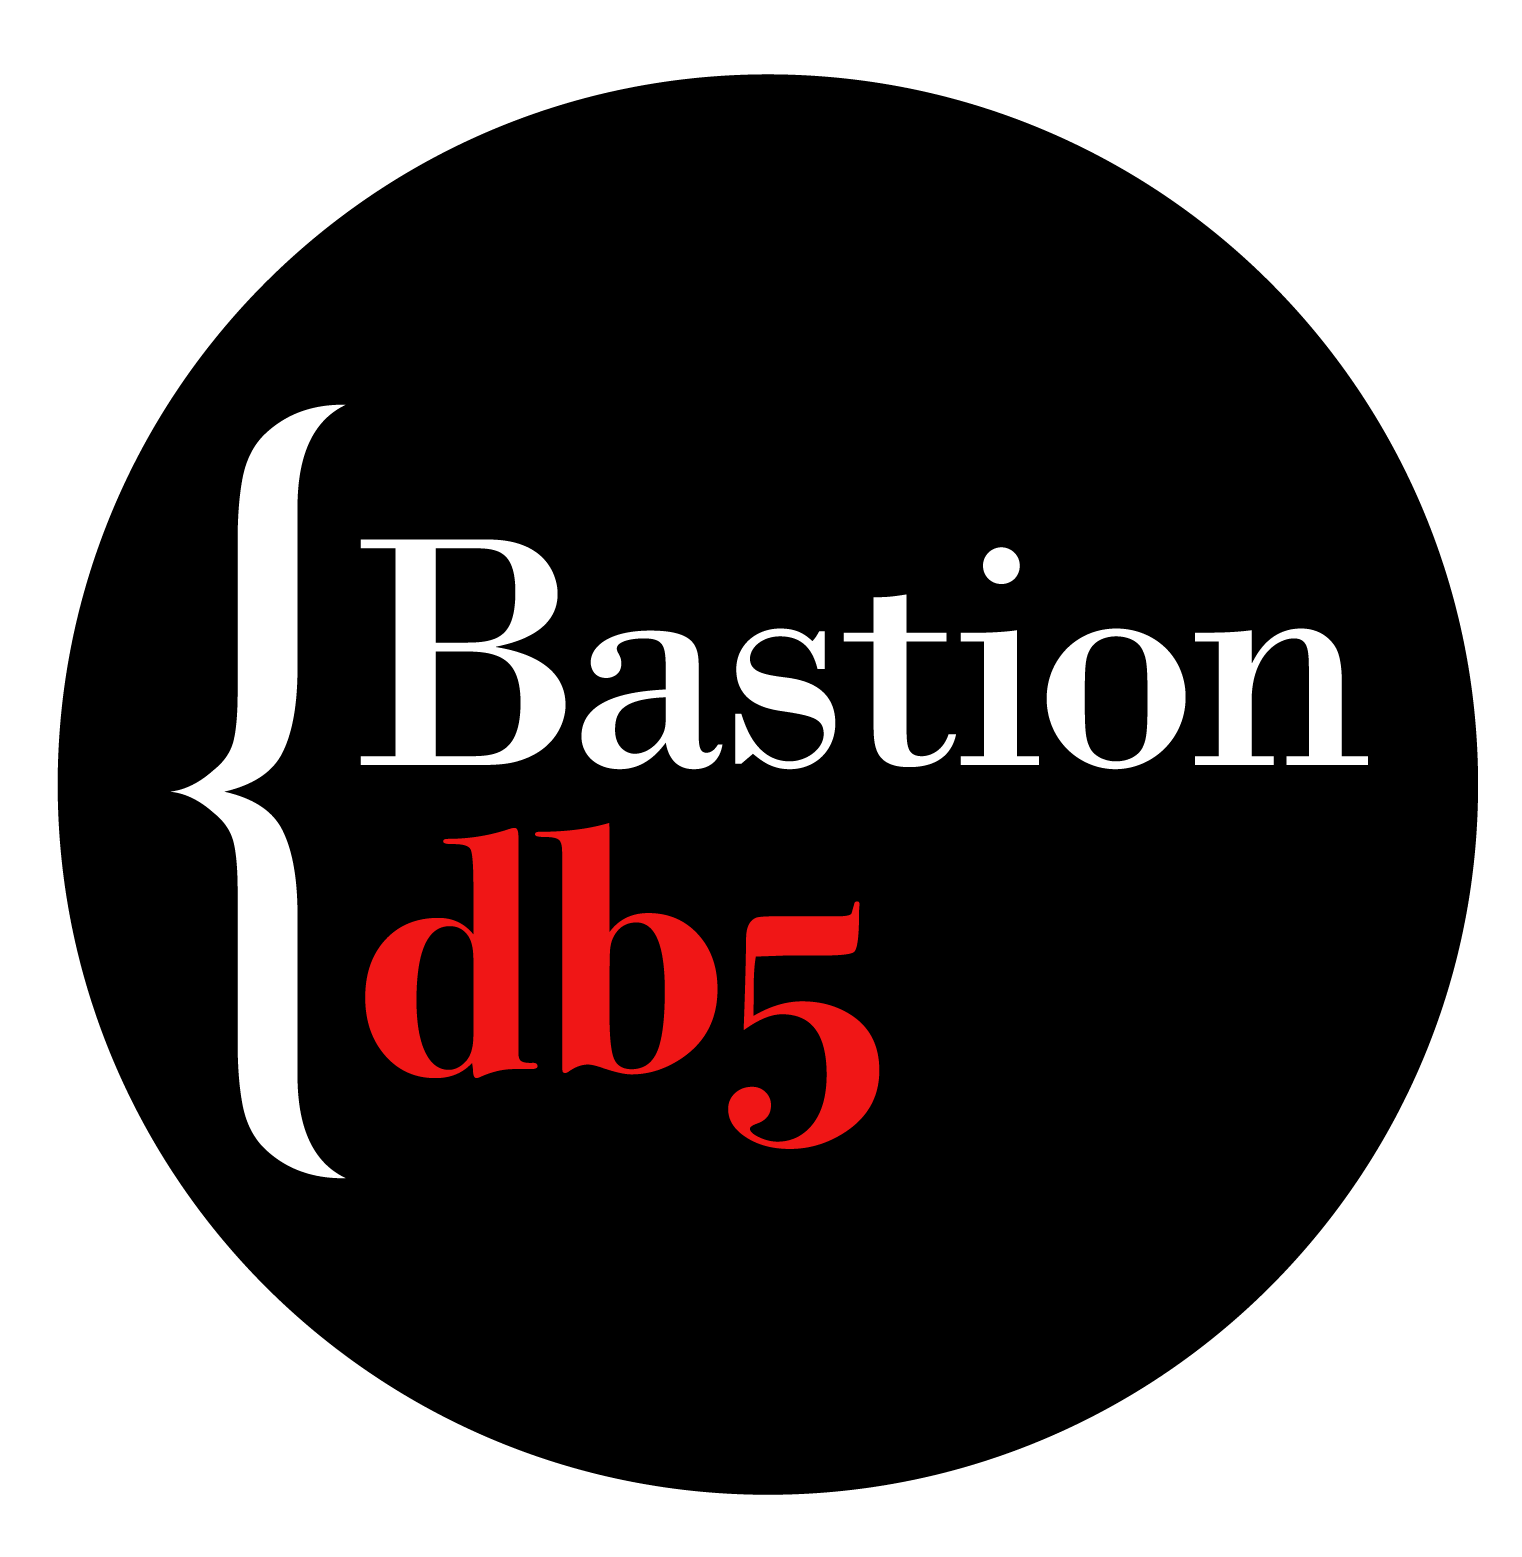 Bastion db5 logo